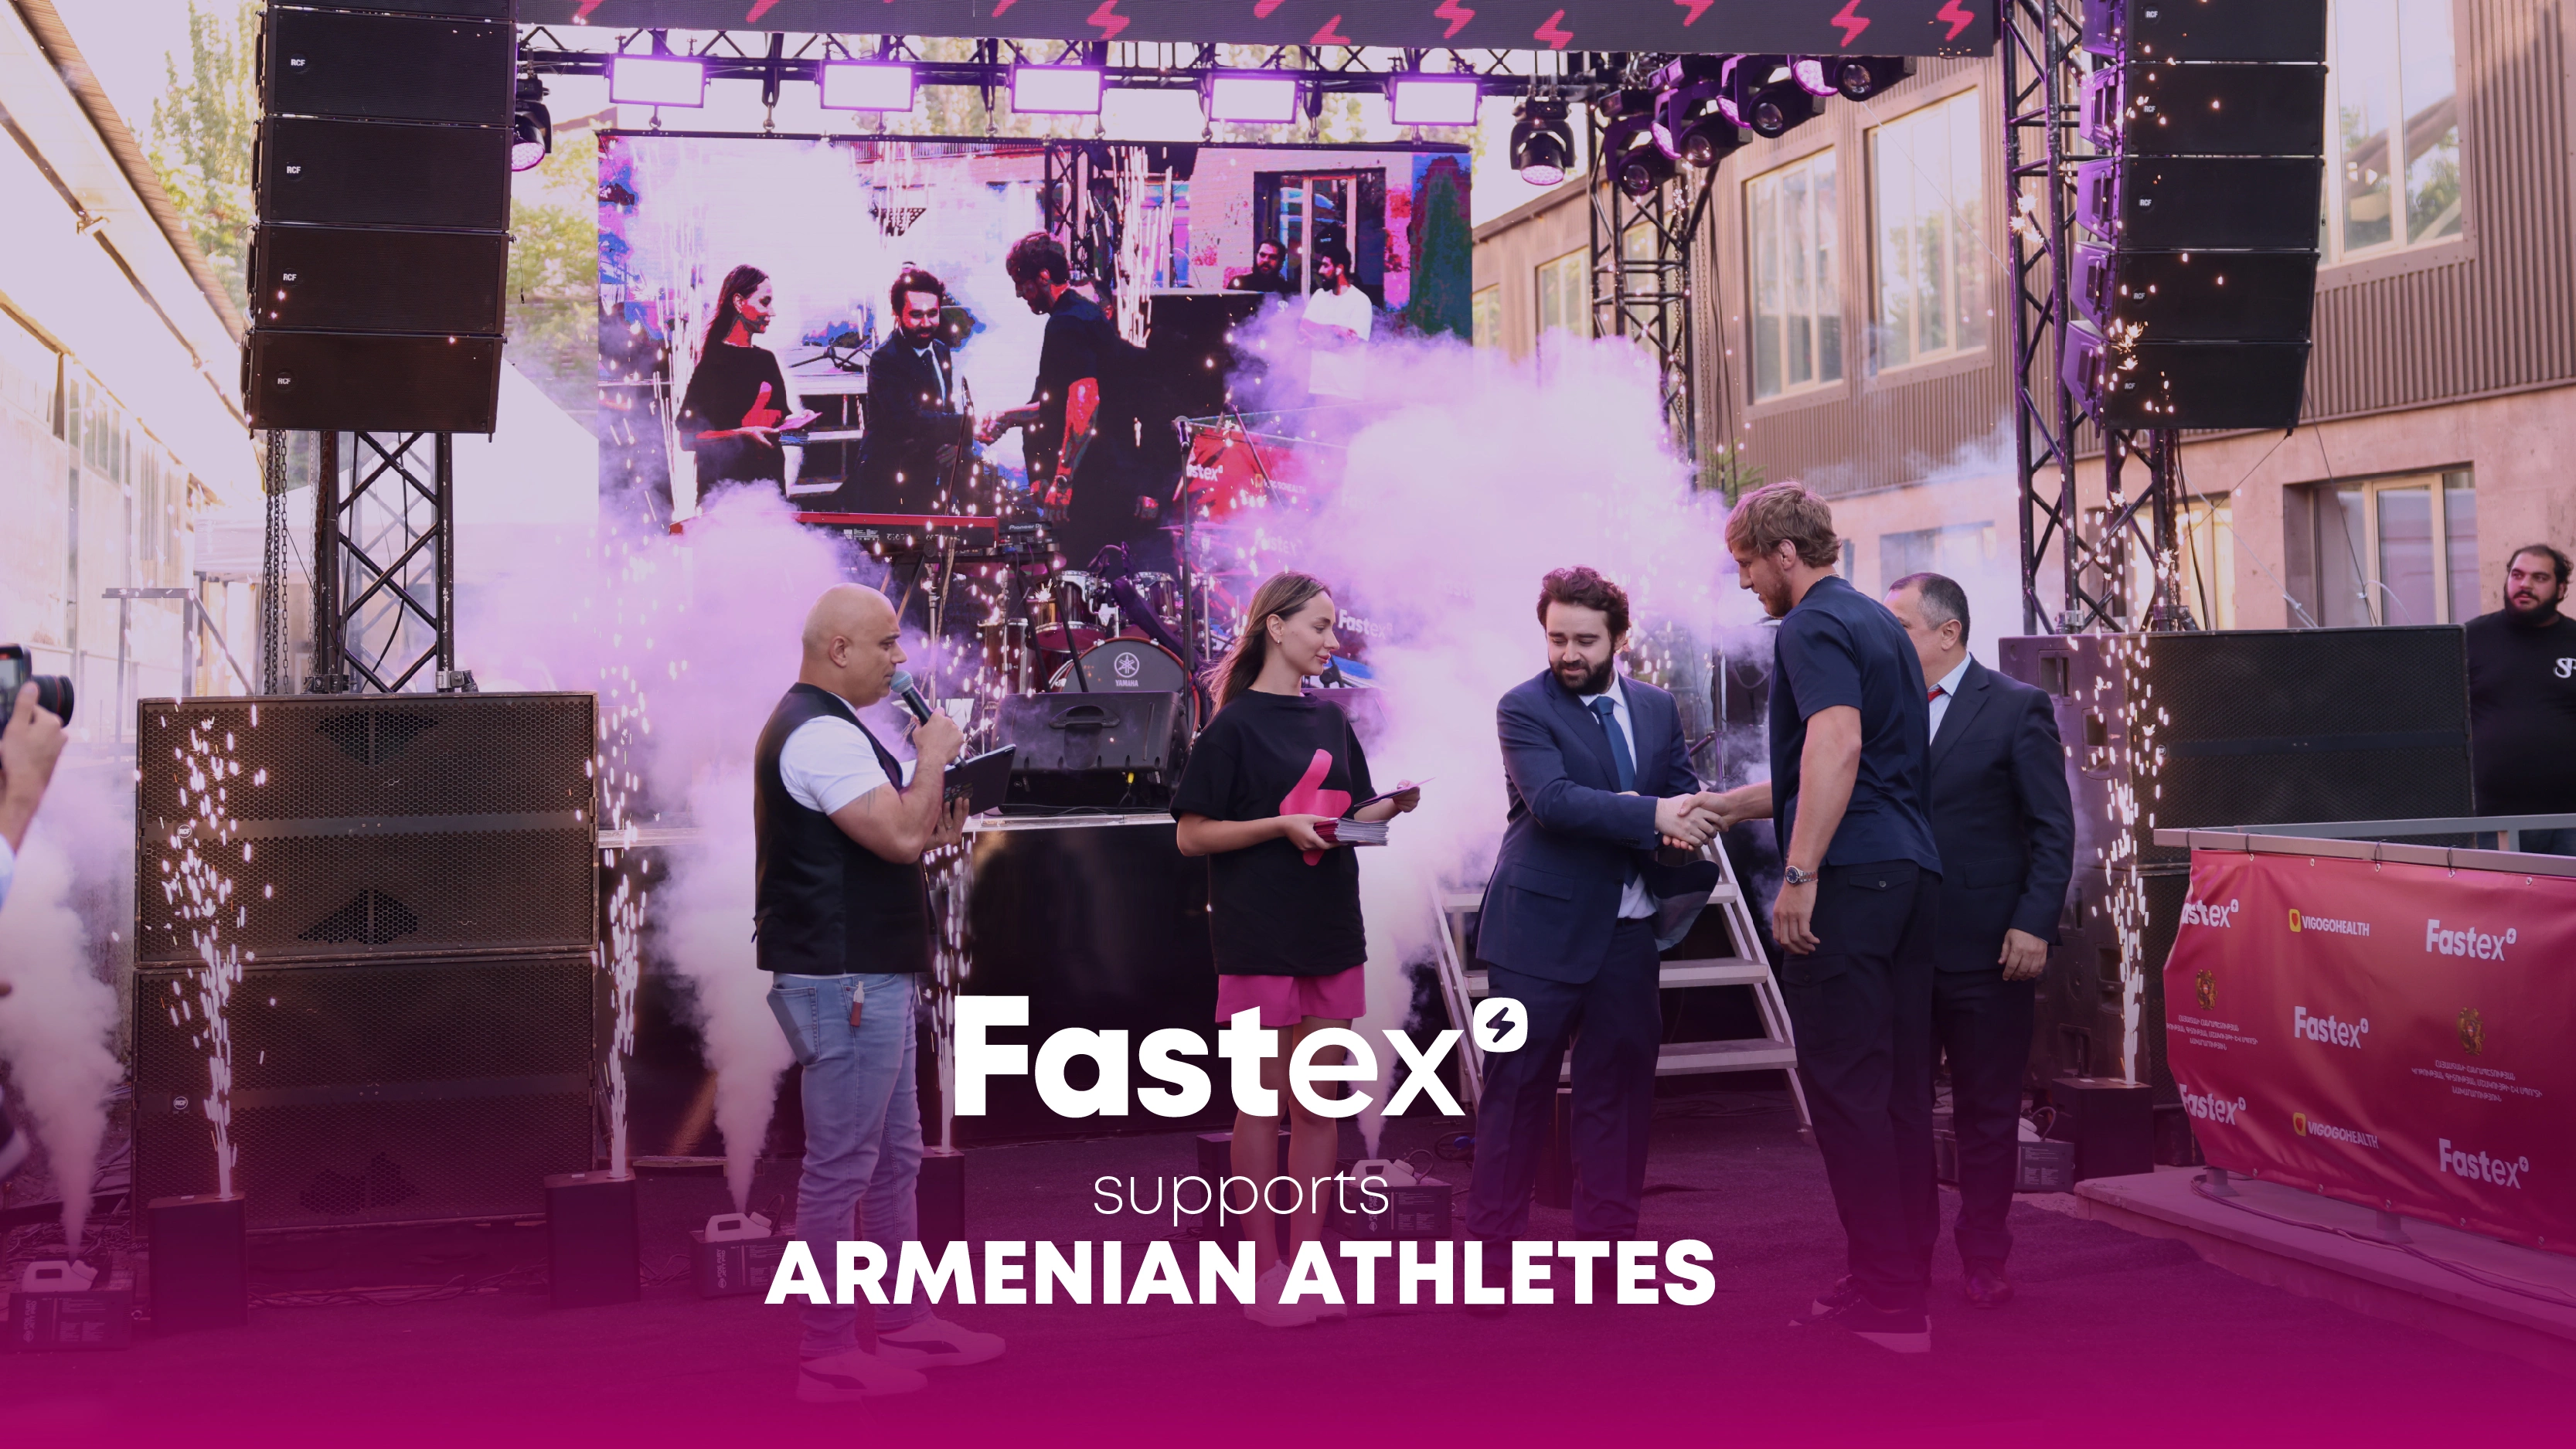 Fastex premió a 103 representantes del deporte armenio con 230.000 FTN